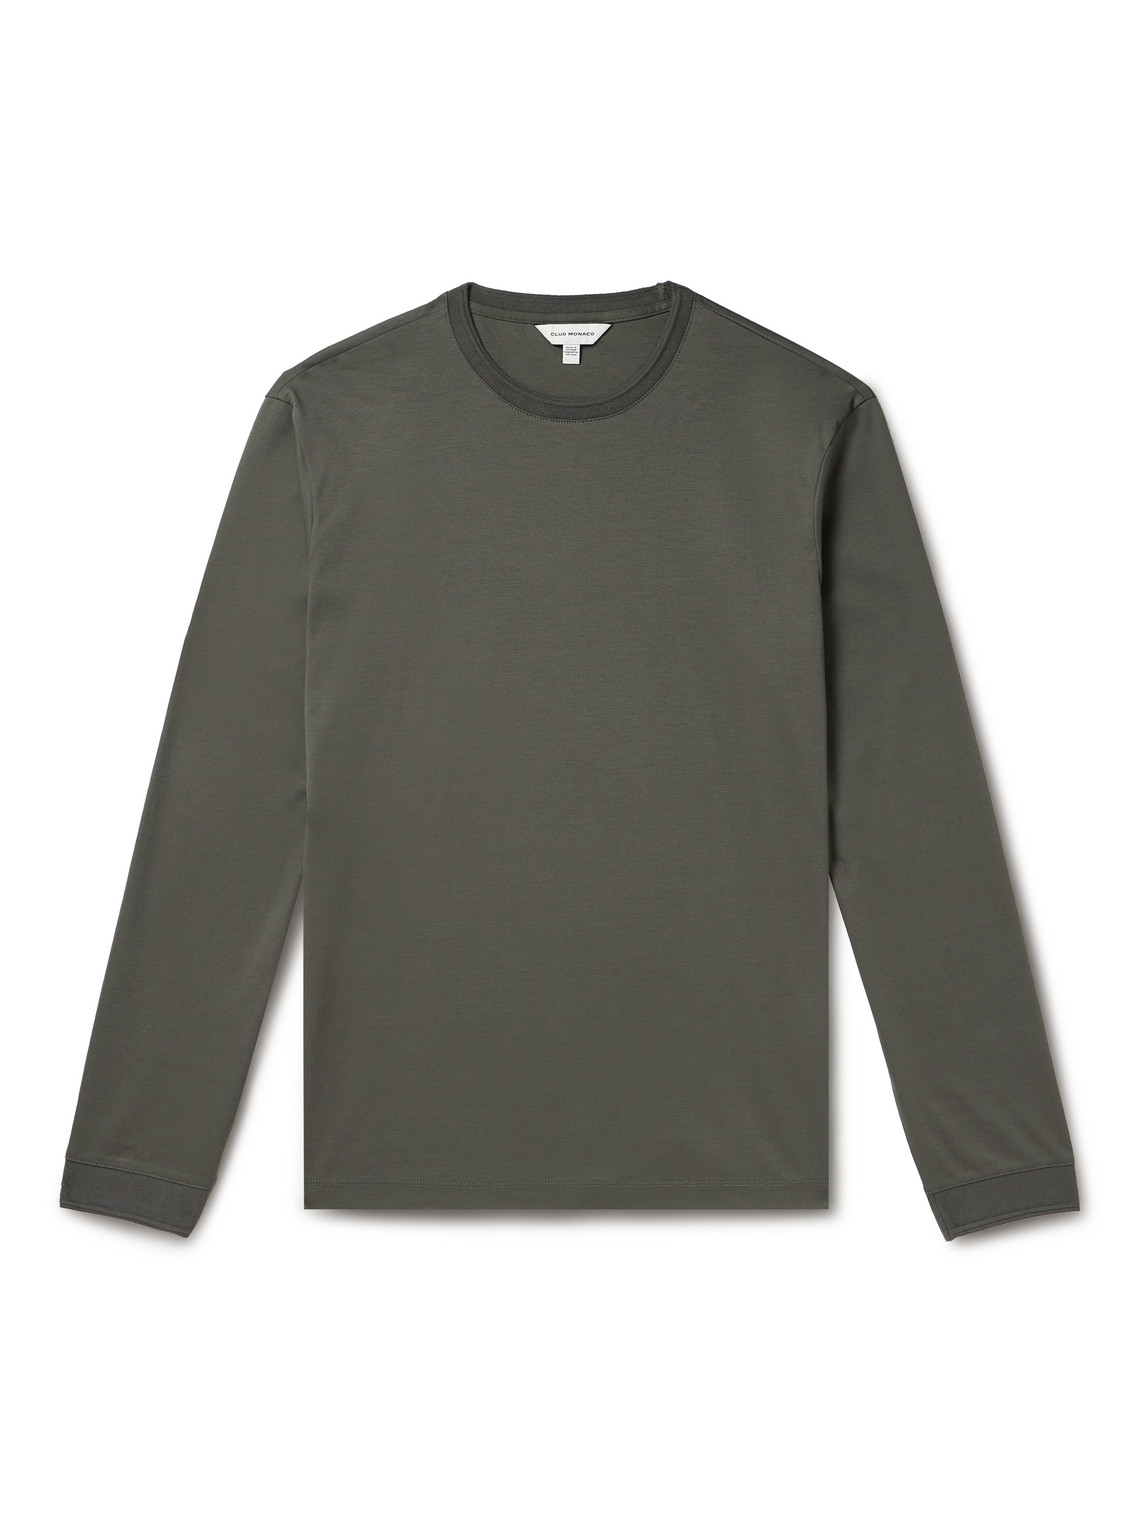 Club Monaco - Refined Cotton-Jersey T-Shirt - Men - Green - M von Club Monaco